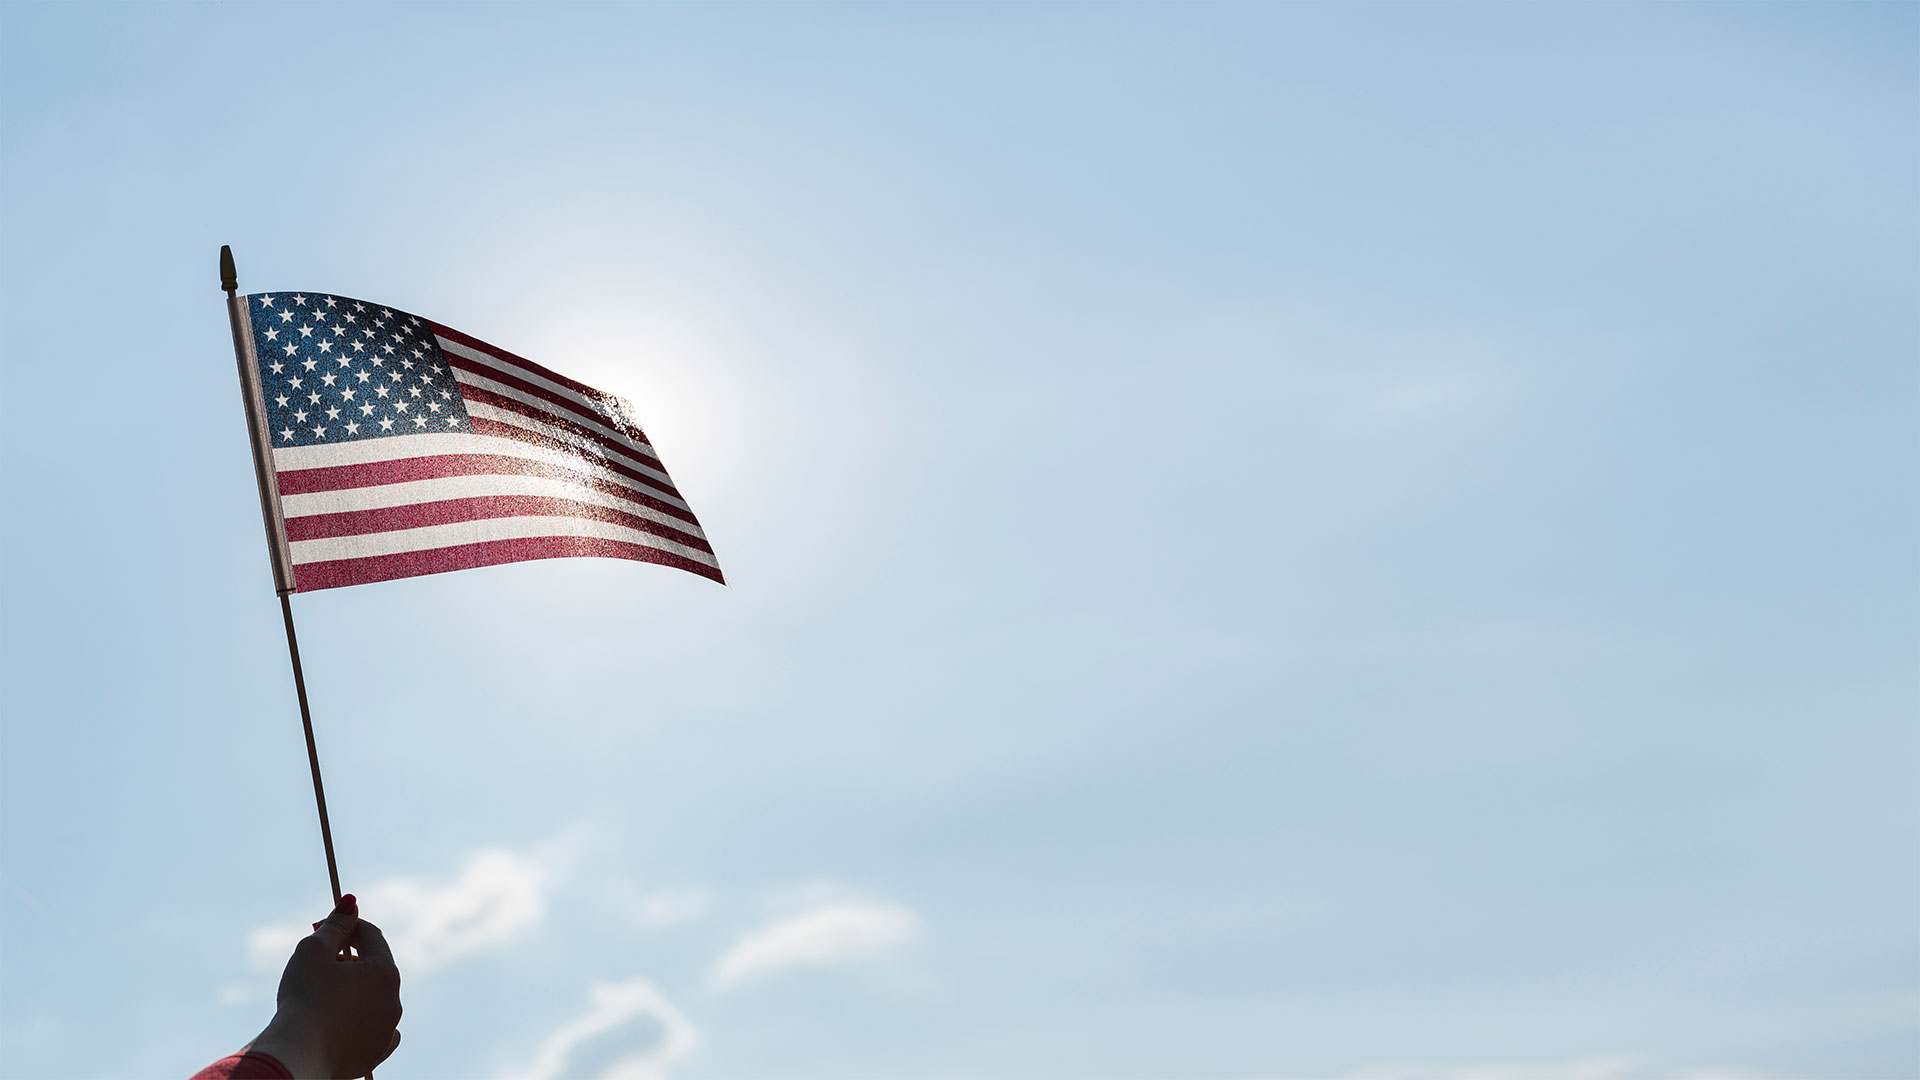 American flag waving against a blue sky